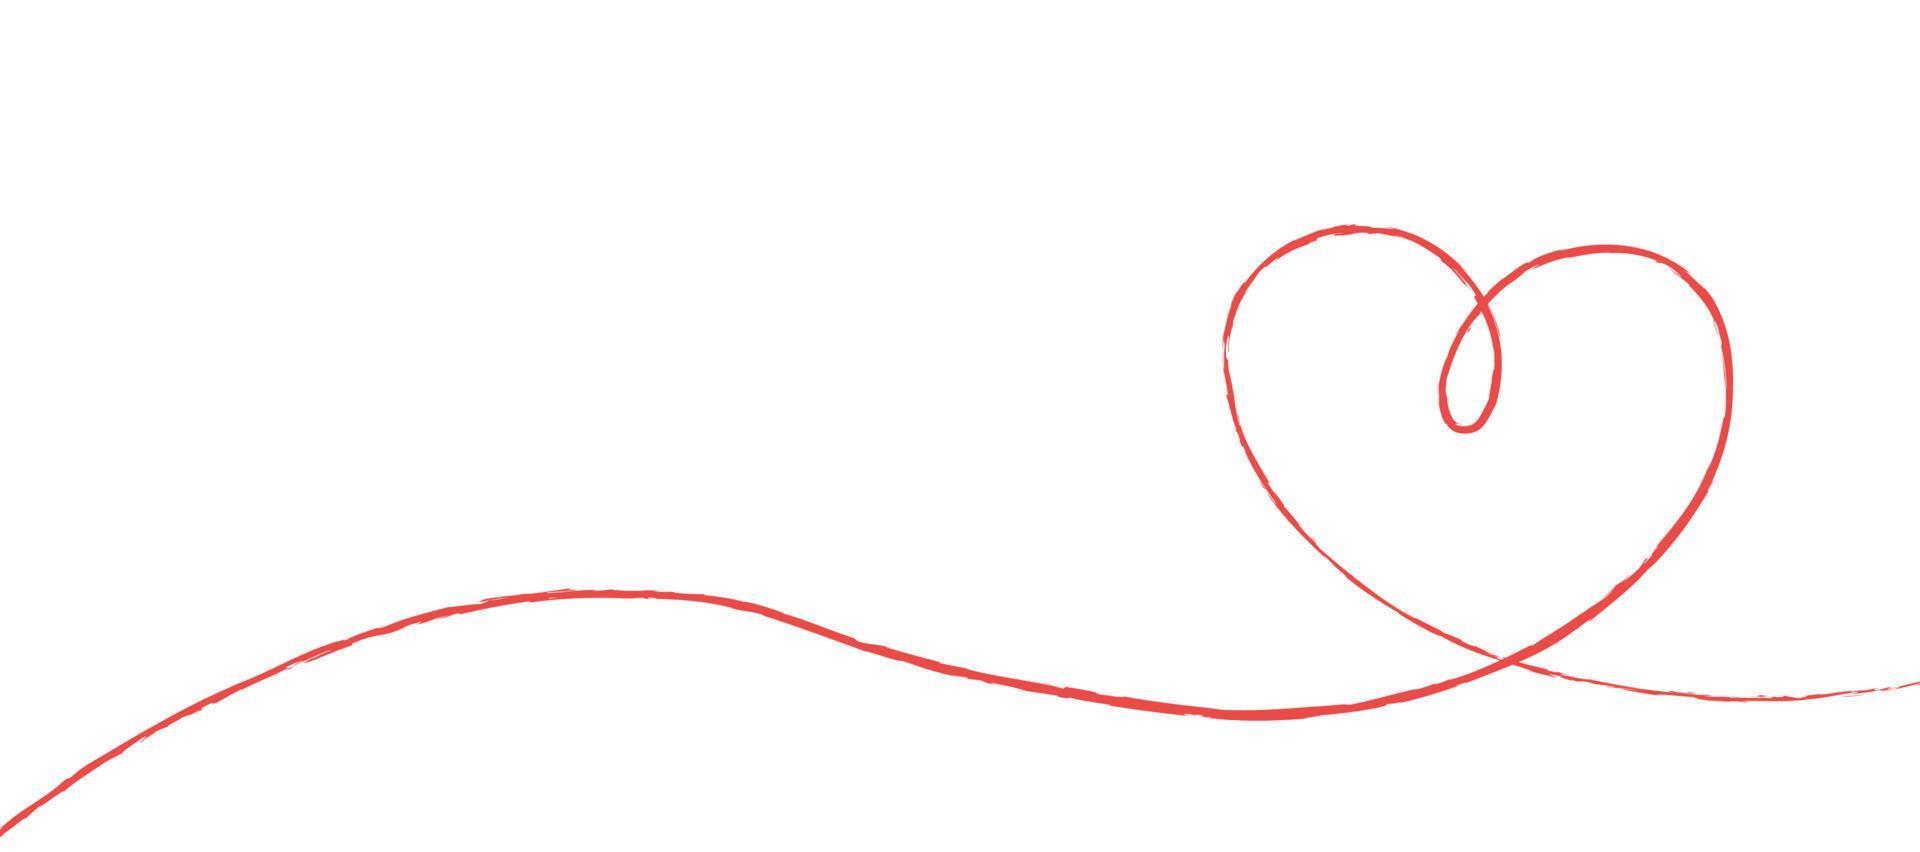 boceto a mano dibujo corazón de línea roja, garabato de amor aislado en fondo blanco - vector